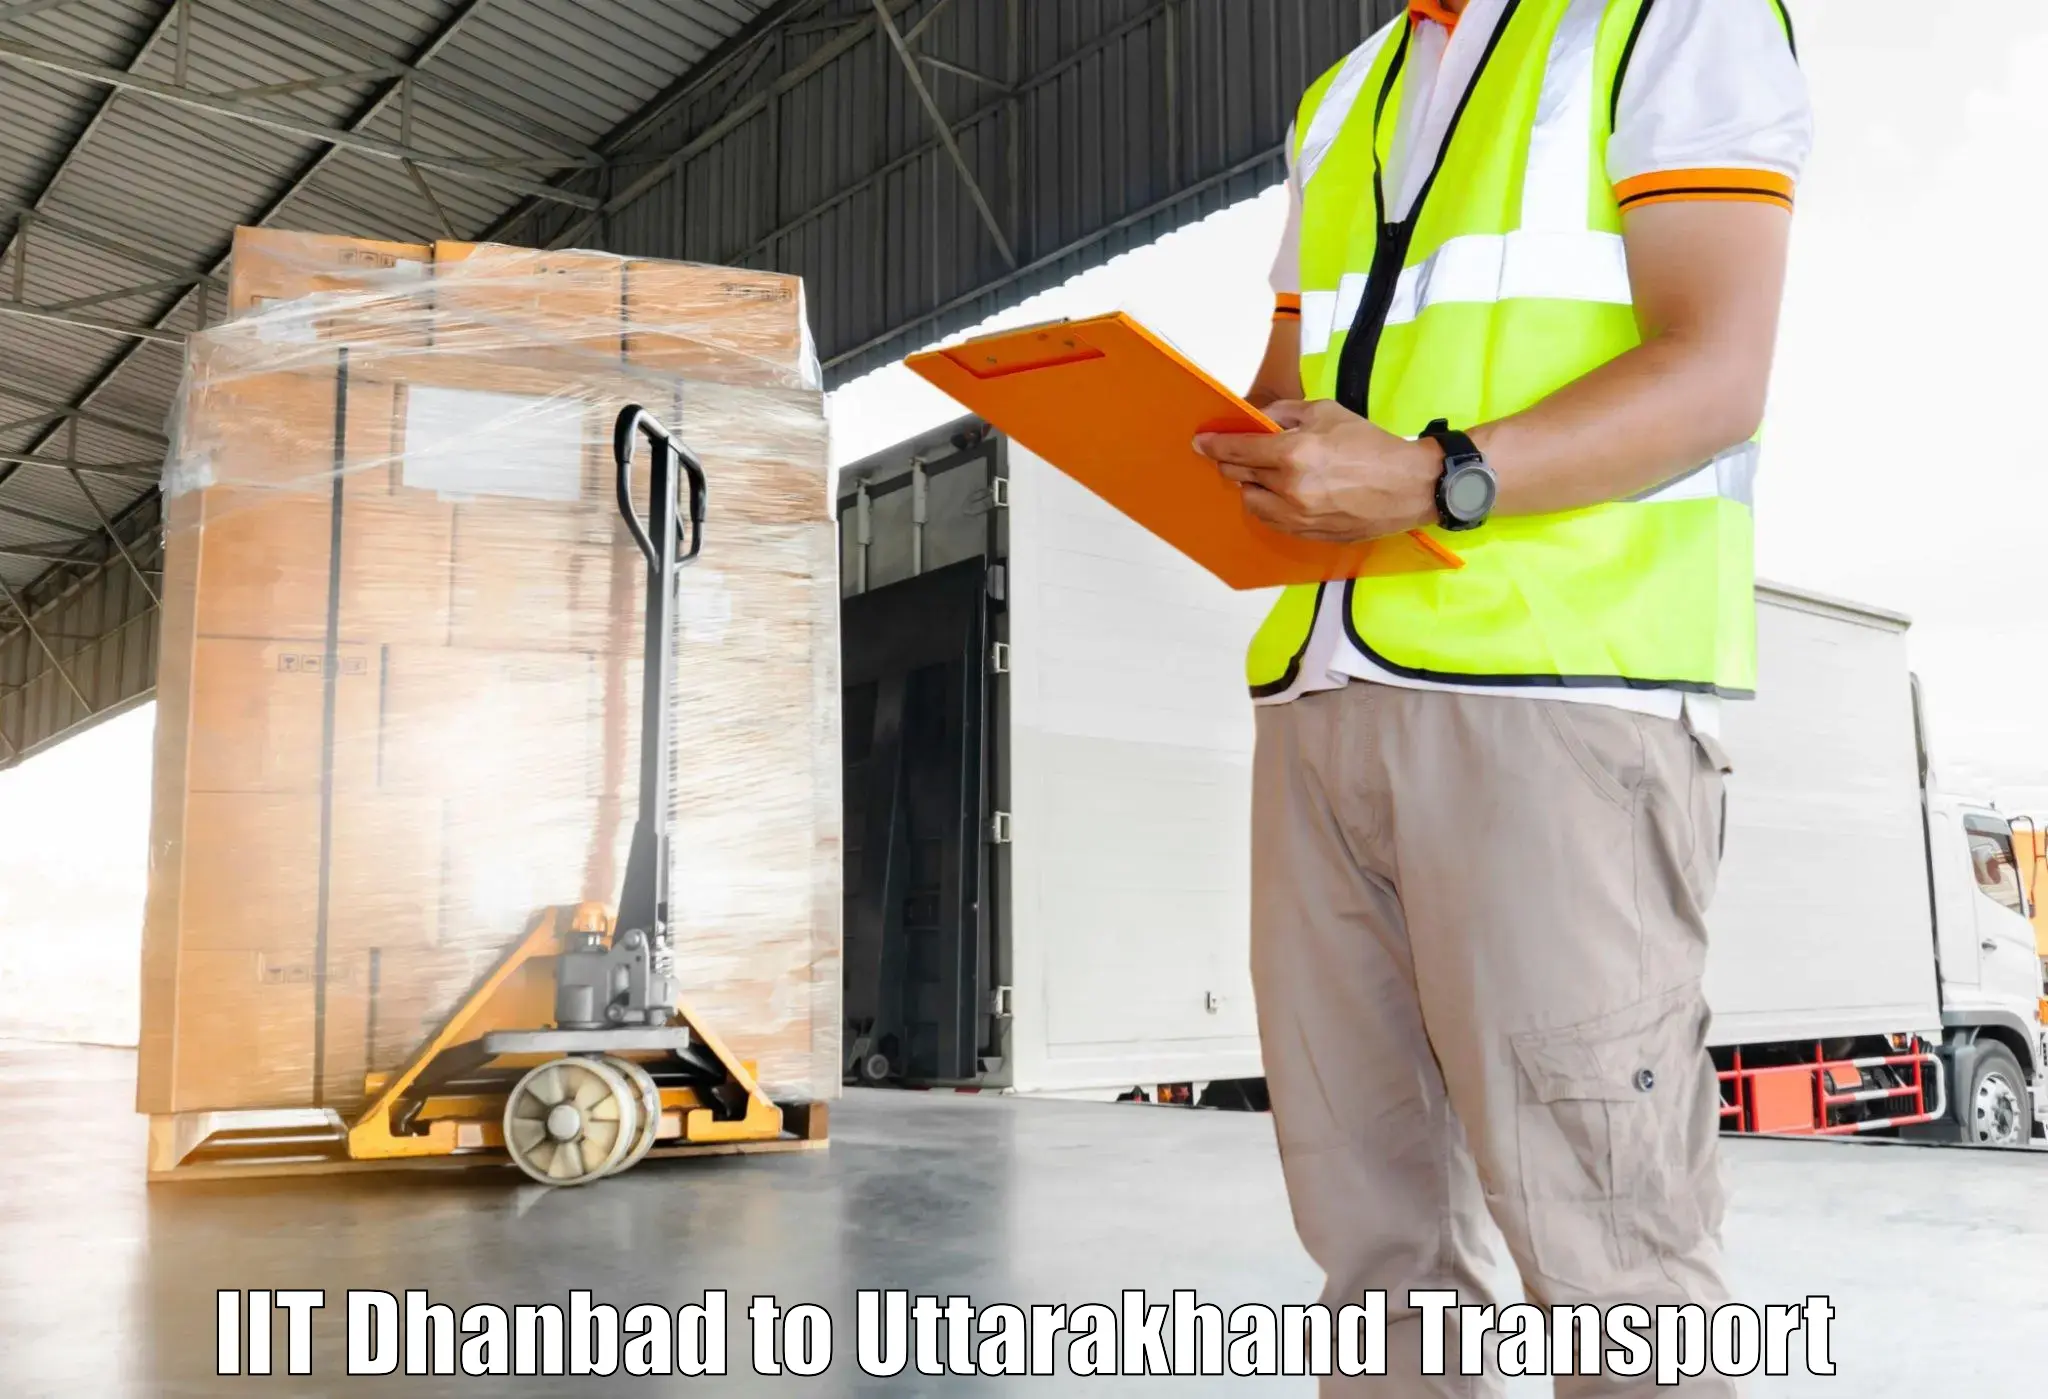 Cycle transportation service IIT Dhanbad to Didihat